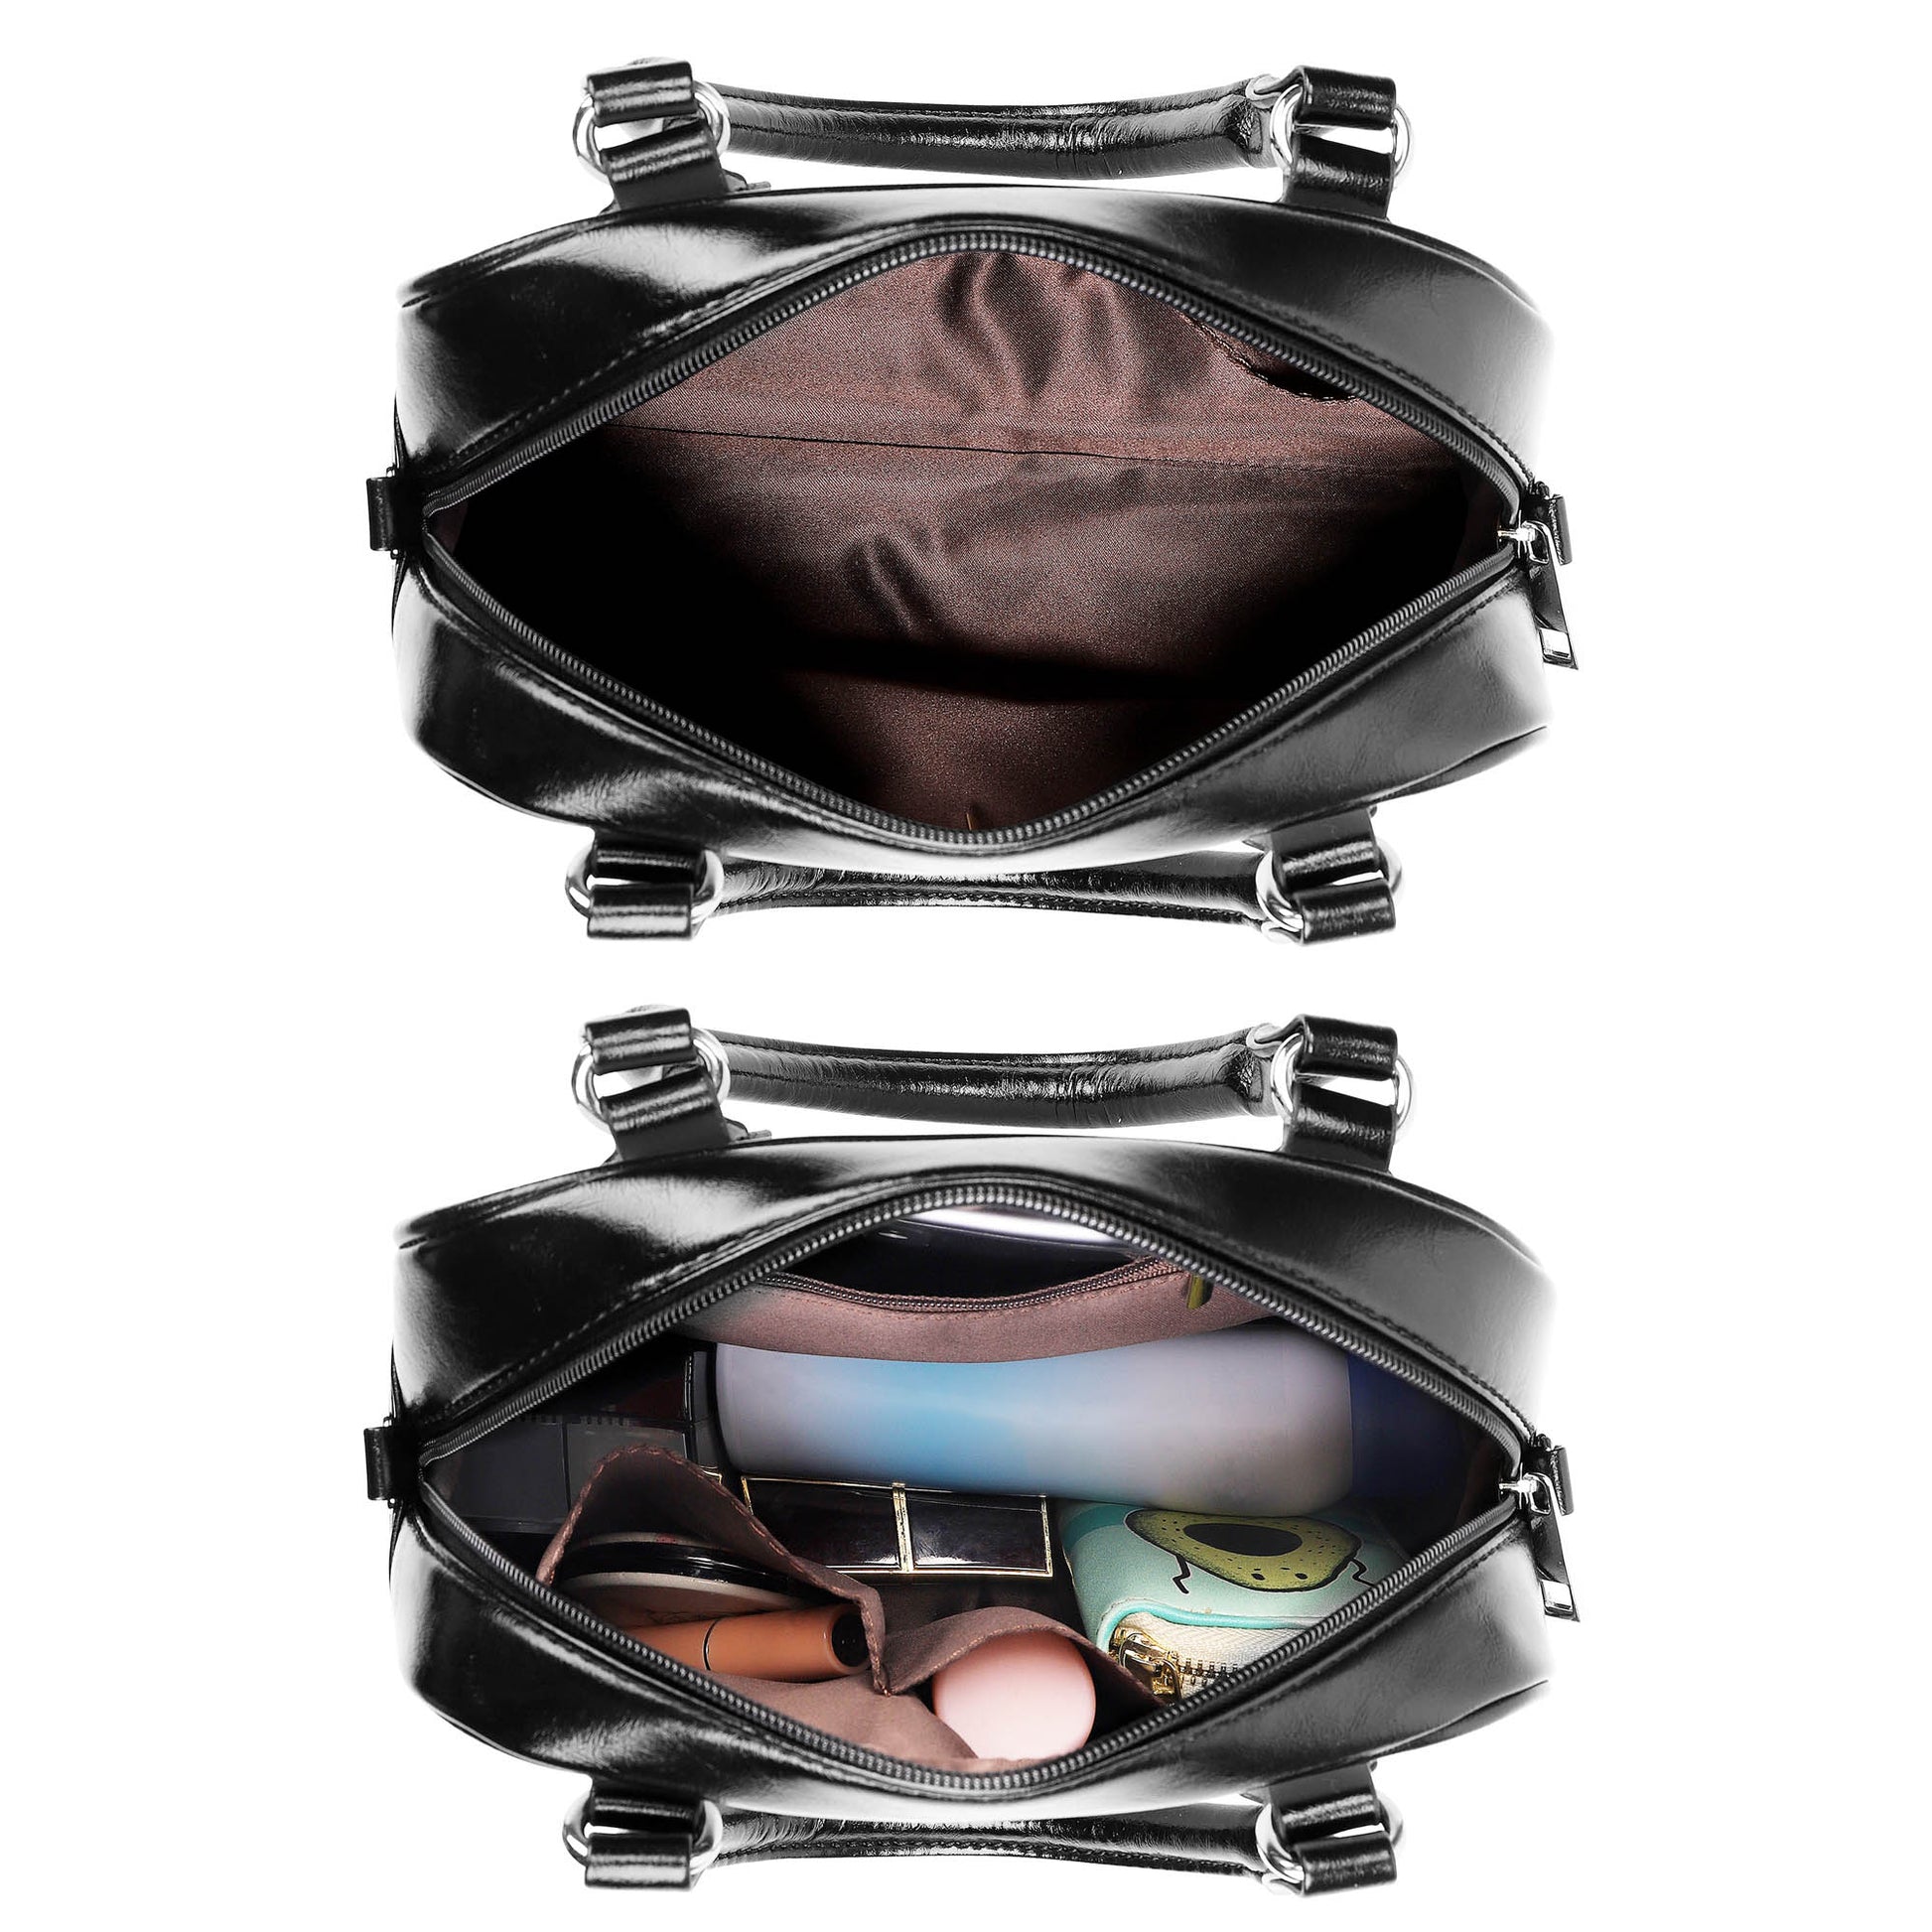 Abercrombie Tartan Shoulder Handbags with Family Crest - Tartanvibesclothing